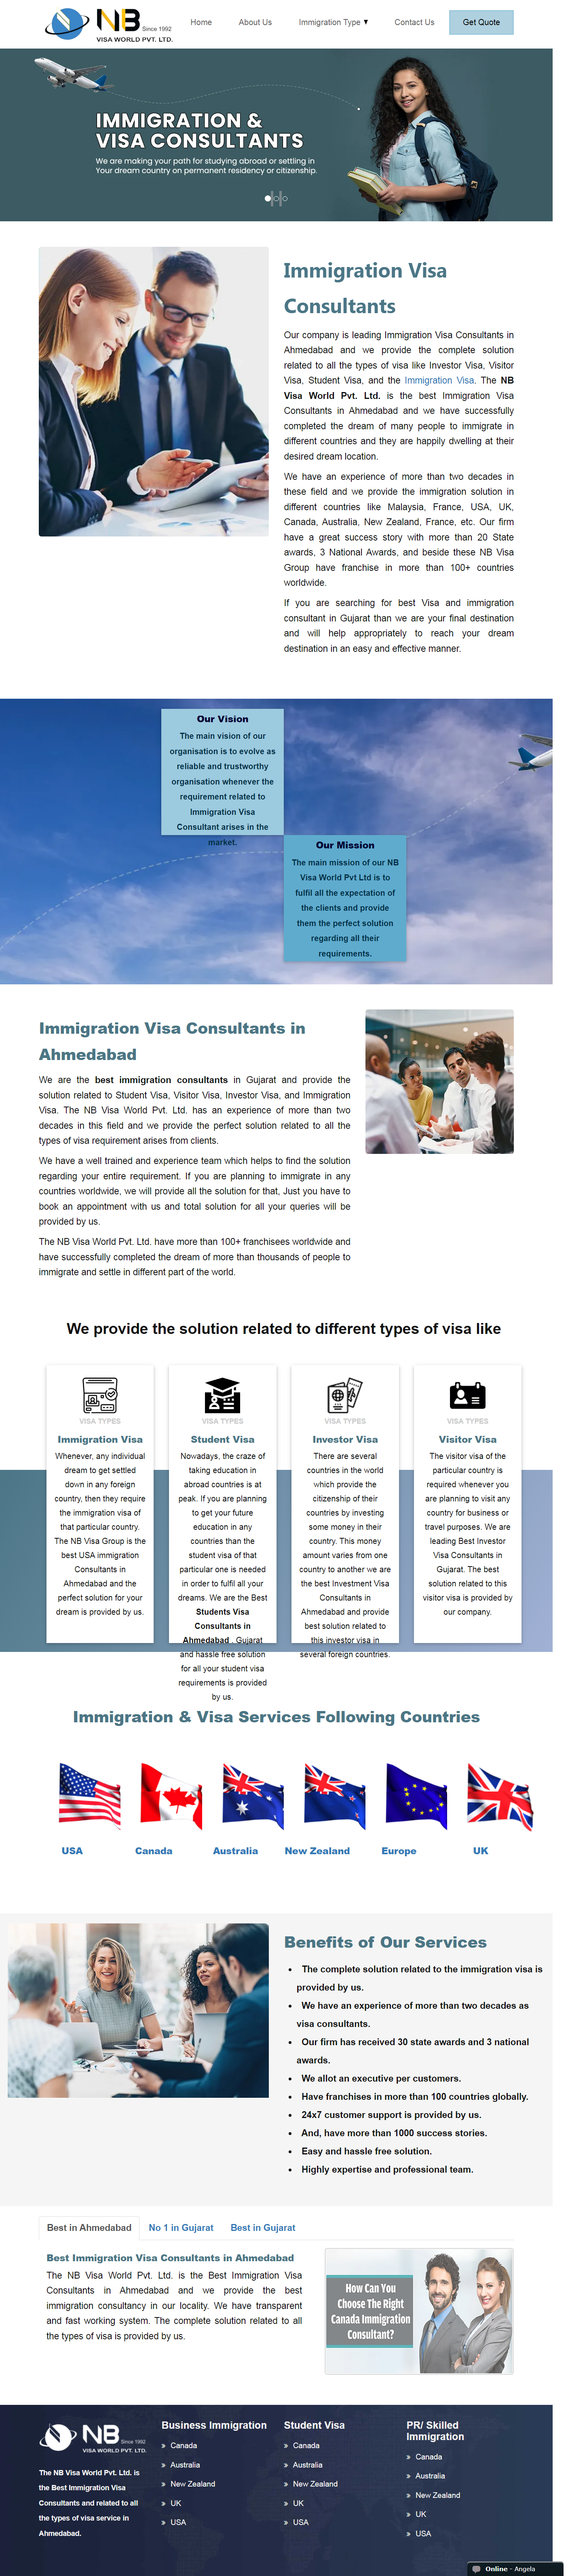 Immigration Visa Consultants